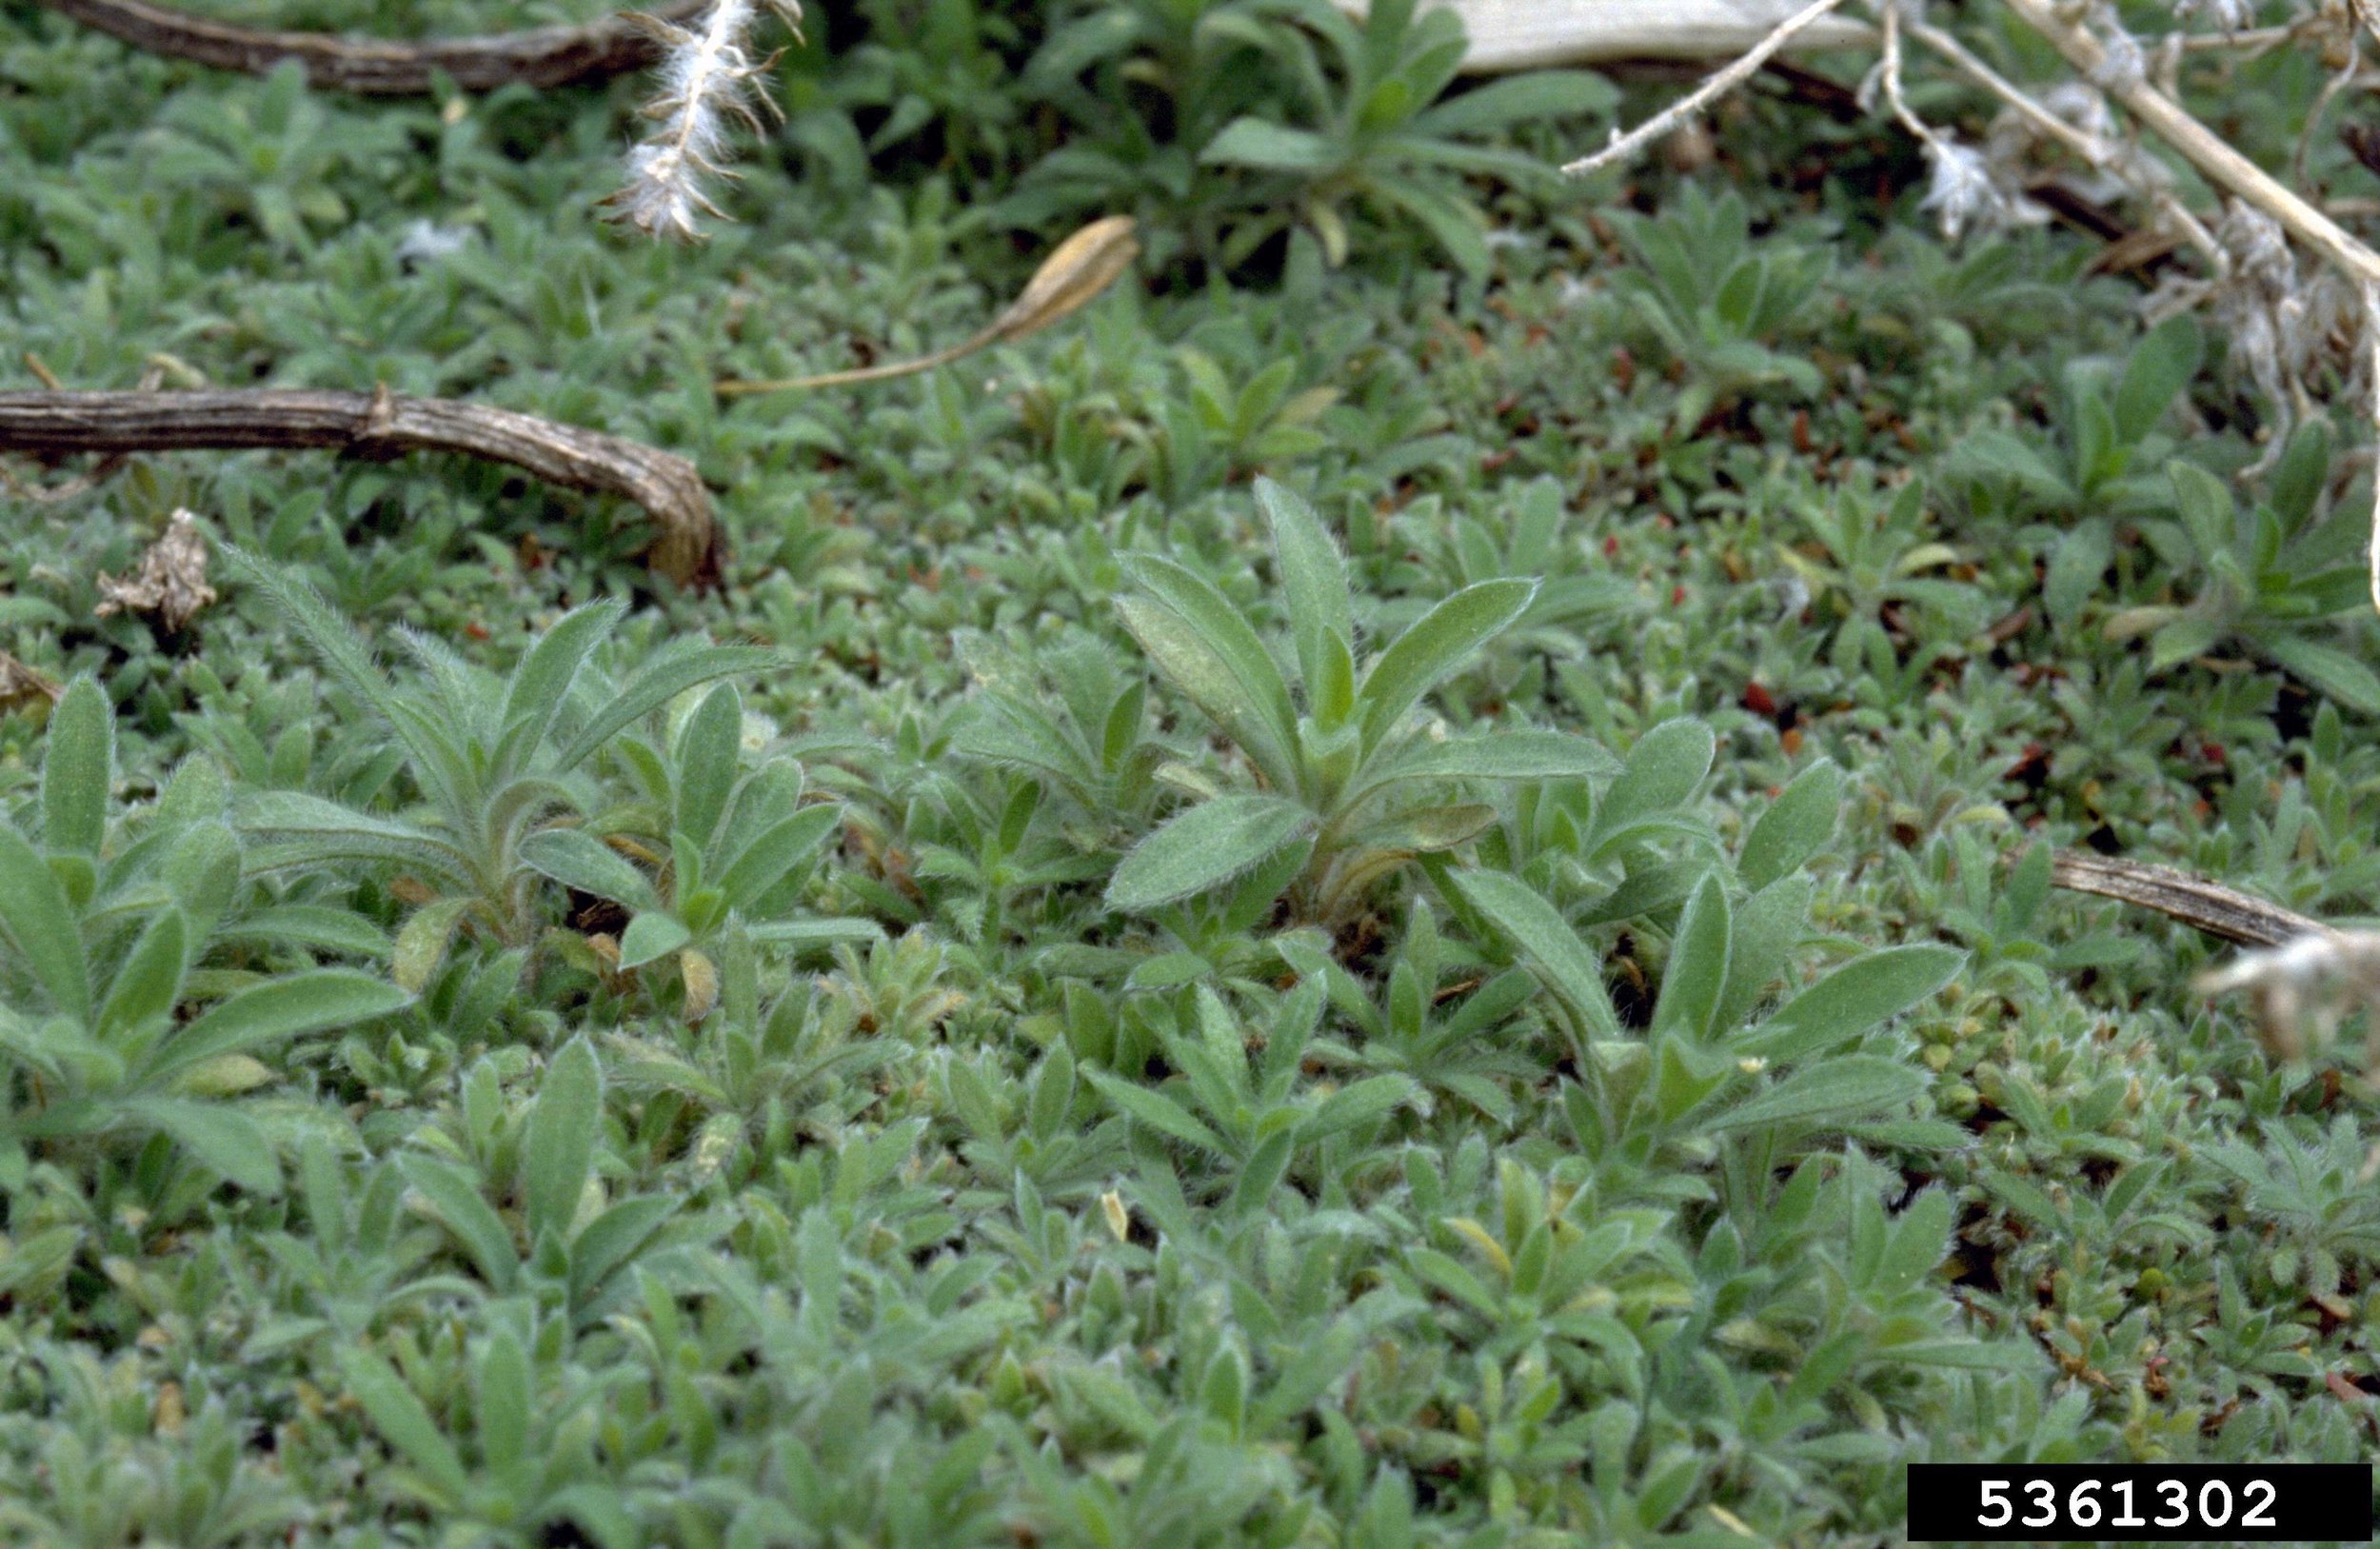 Kochia mat of seedlings